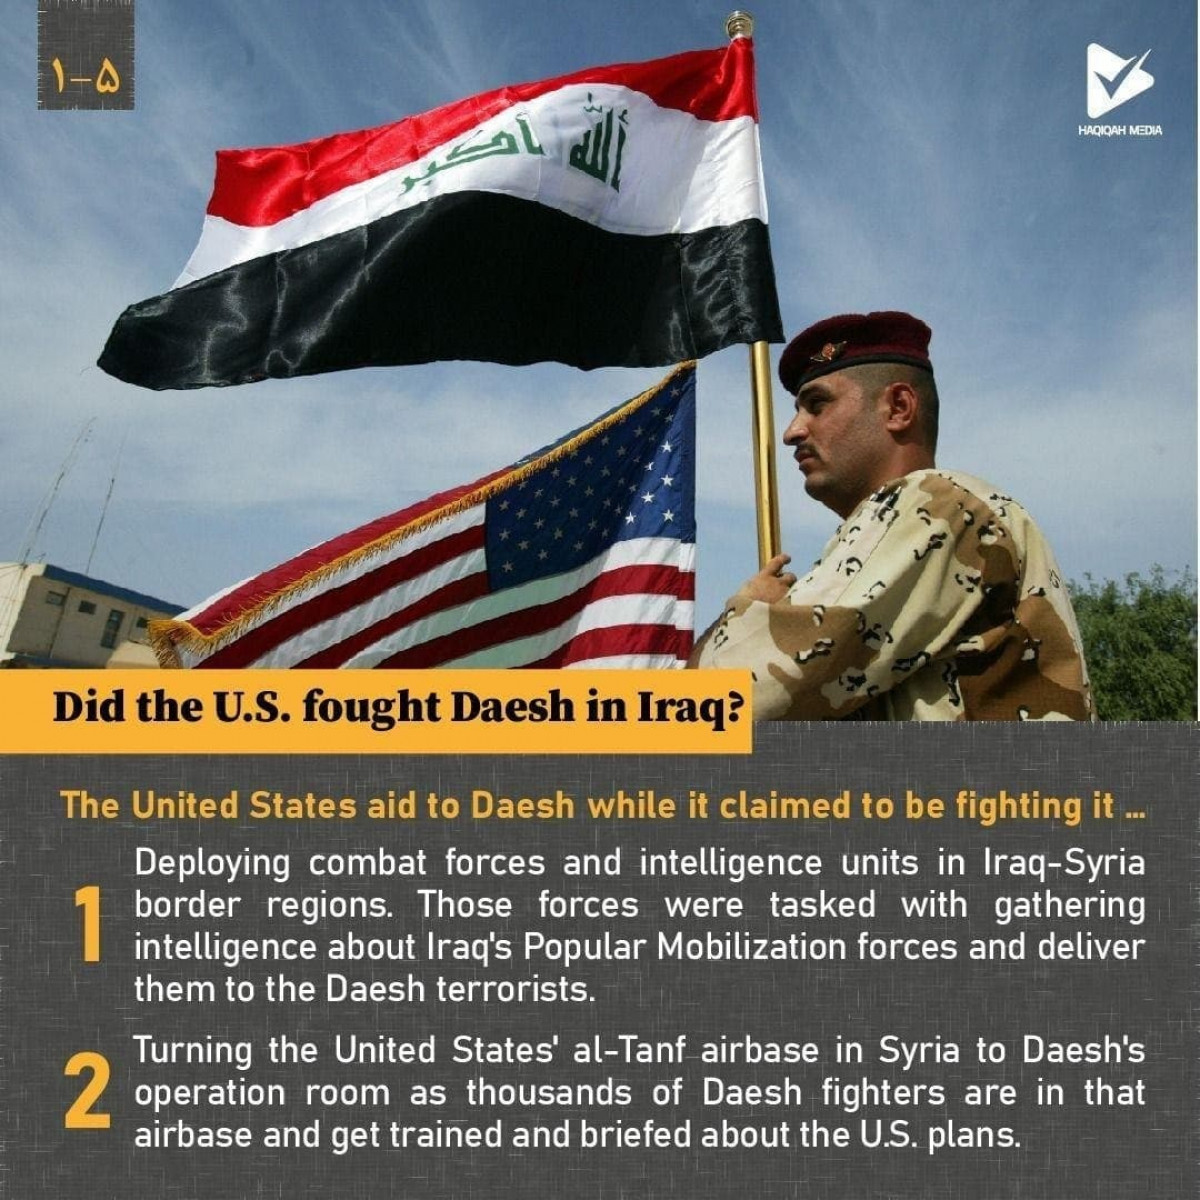 Did the U.S. fought Daesh in Iraq?